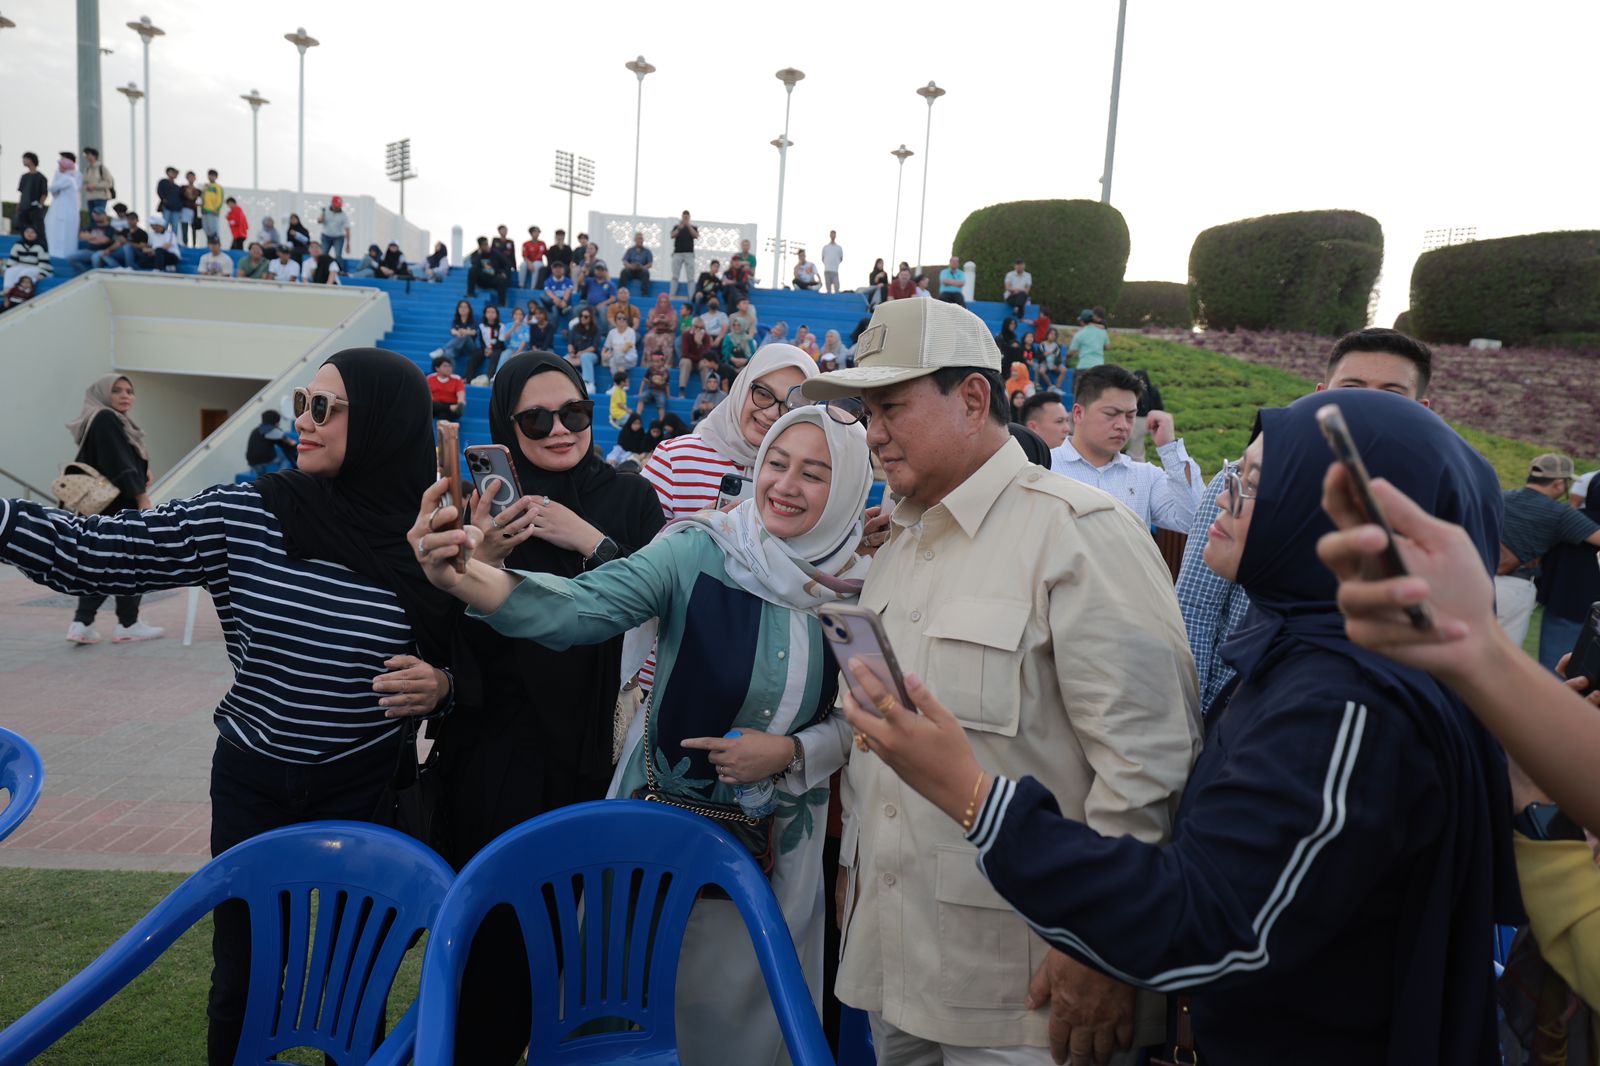 Ketua Umum Partai Gerindra sekaligus Menhan Prabowo Subianto diajak selfie dengan ibu-ibu WNI di Qatar (Sinpo.id/Tim Media)